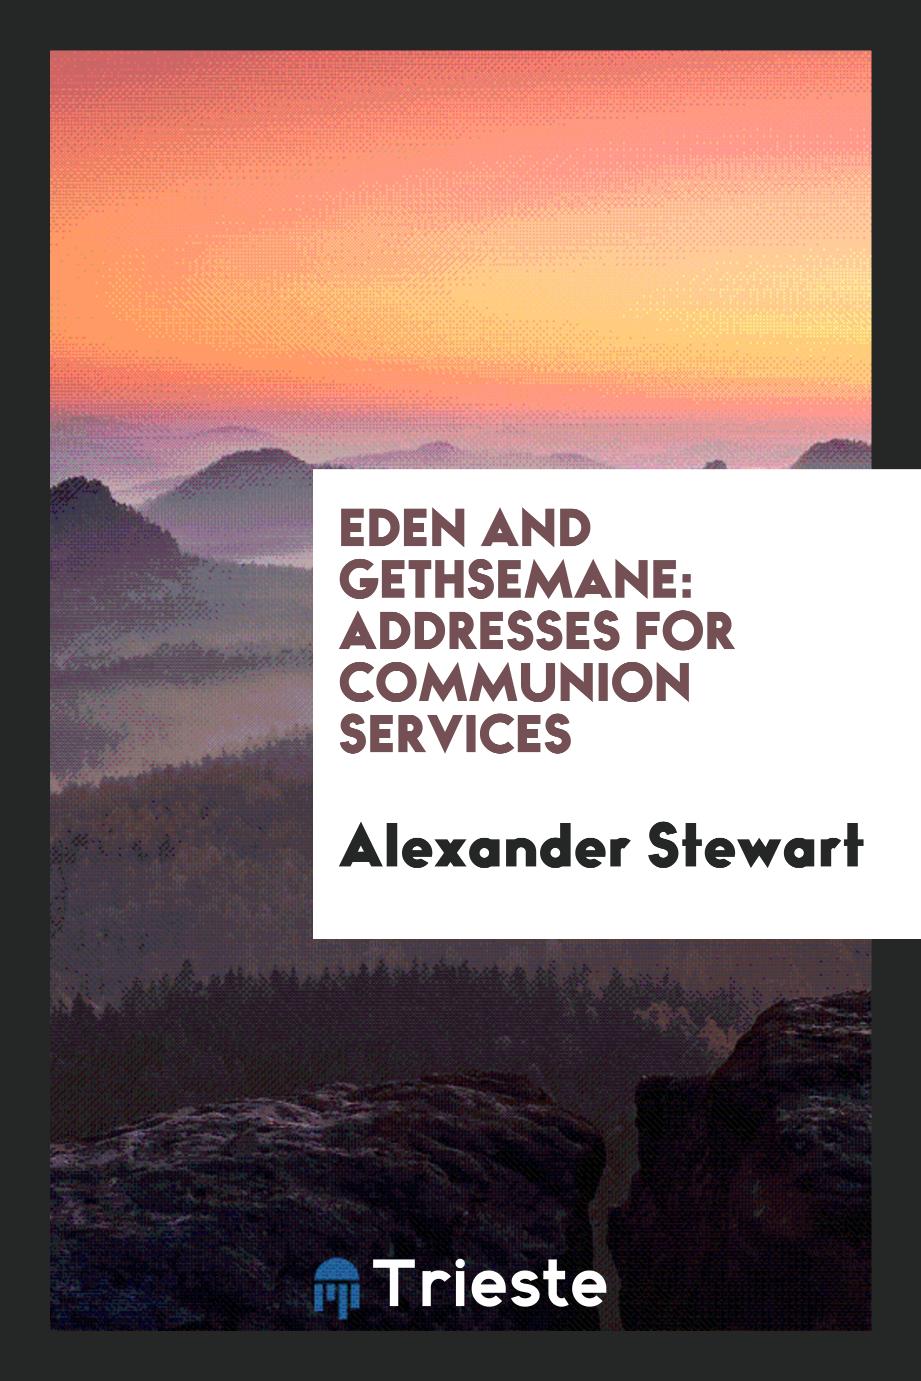 Eden and Gethsemane: addresses for Communion services